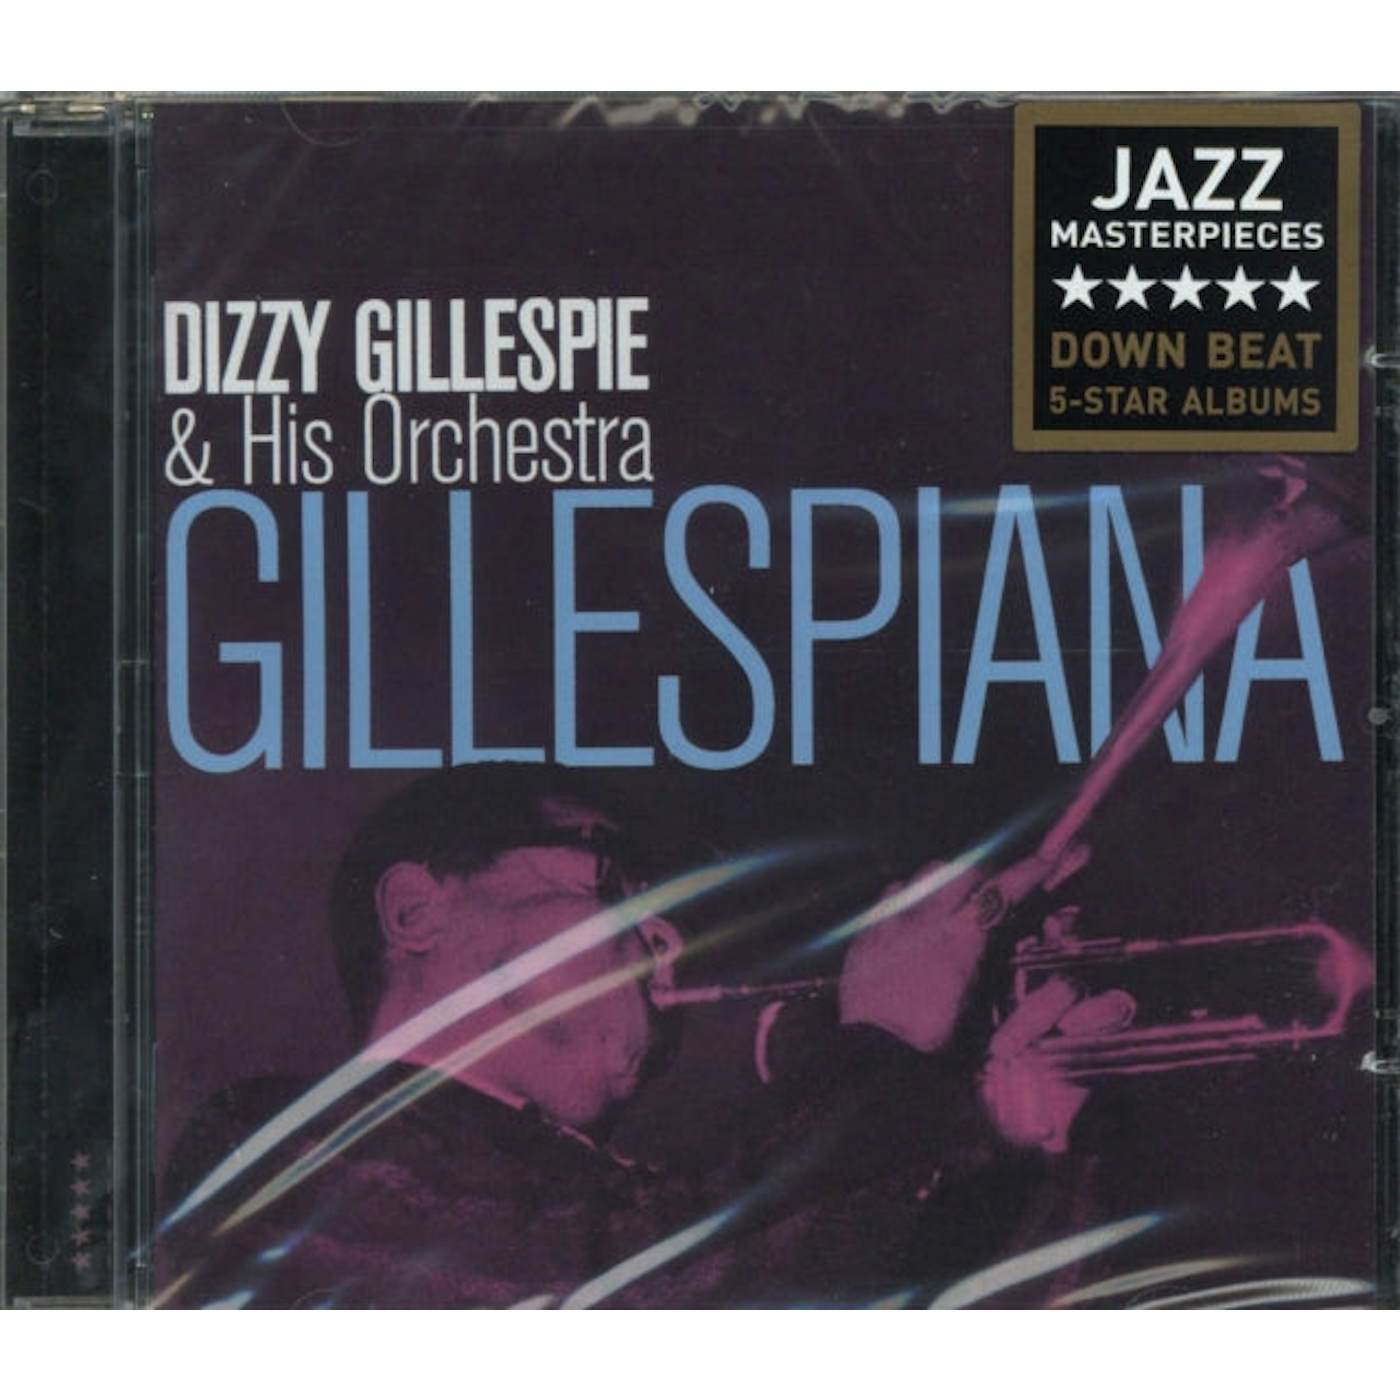 Dizzy Gillespie CD - Gillespiana